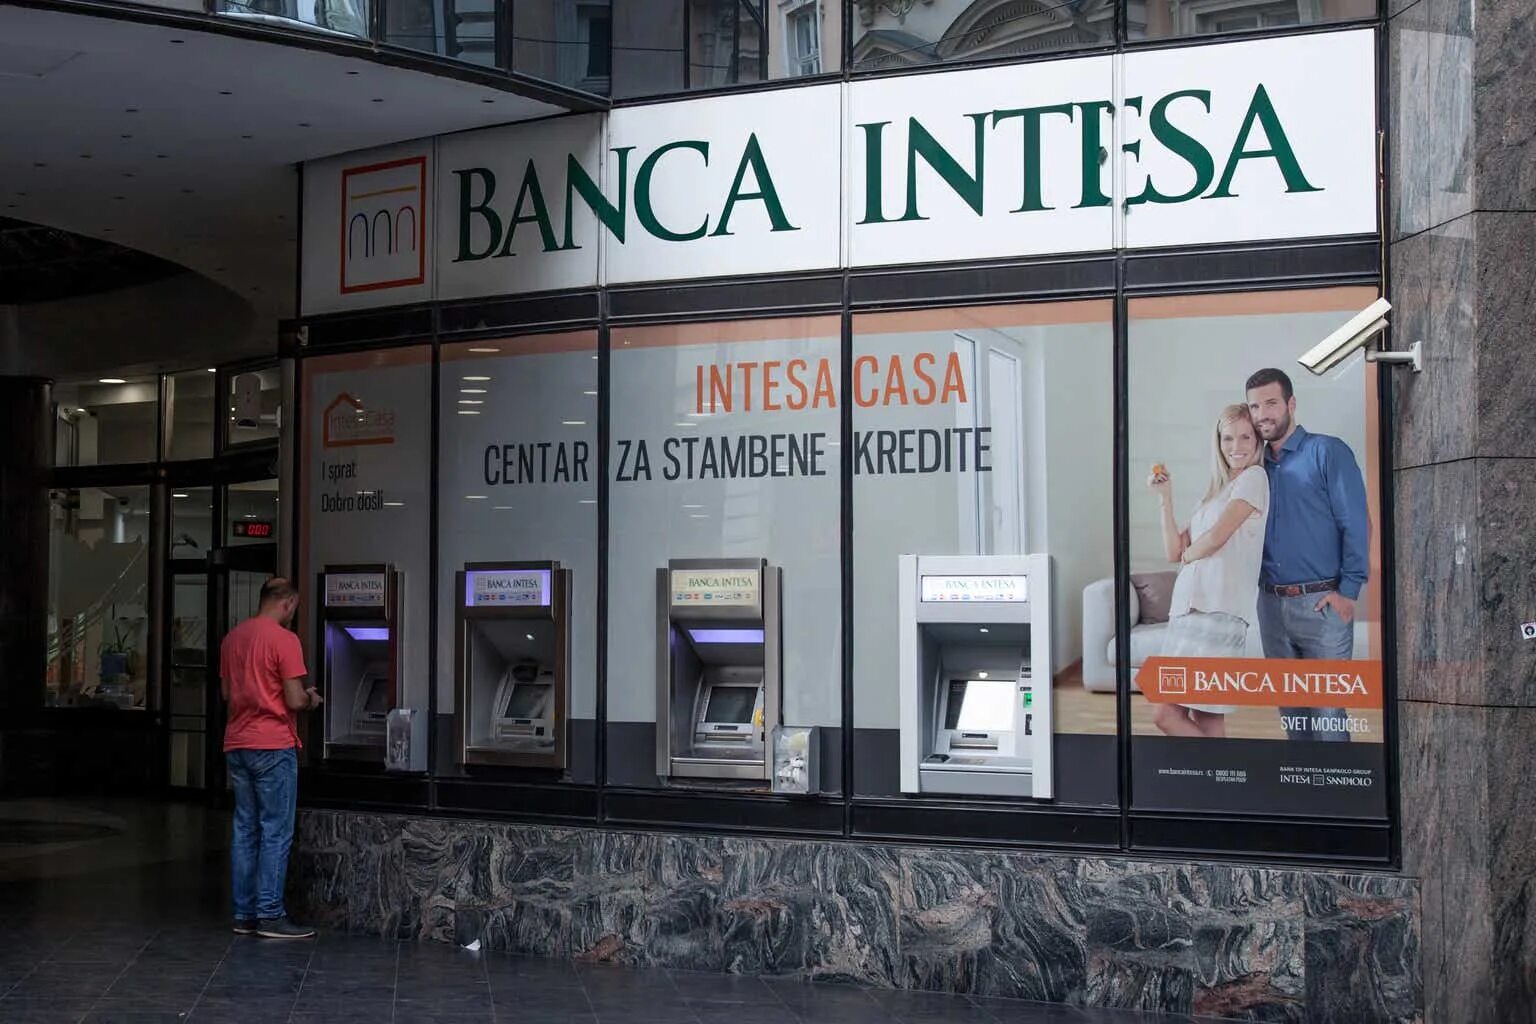 Intesa sanpaolo. Intesa логотип. Интеза Санпаоло. Интеза Санпаоло итальянский банк фото. Банк Интеза лого.